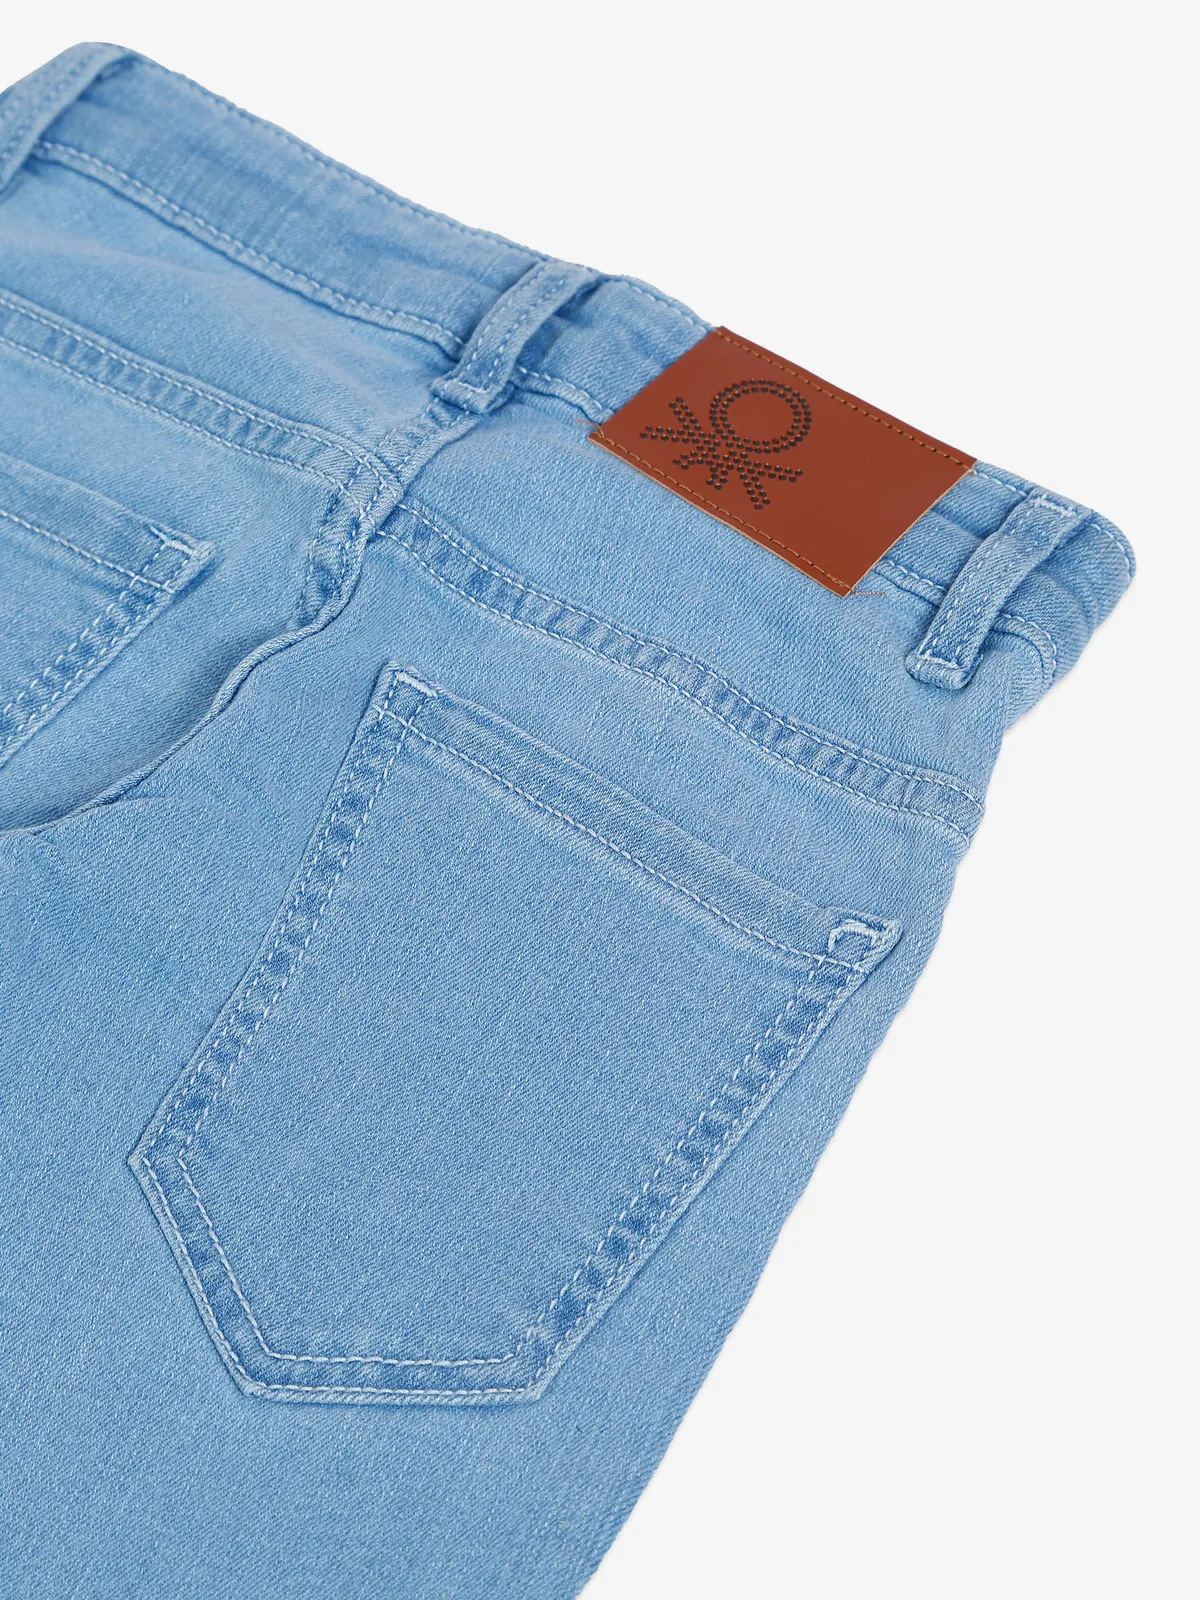 UCB light blue solid slim fit jeans